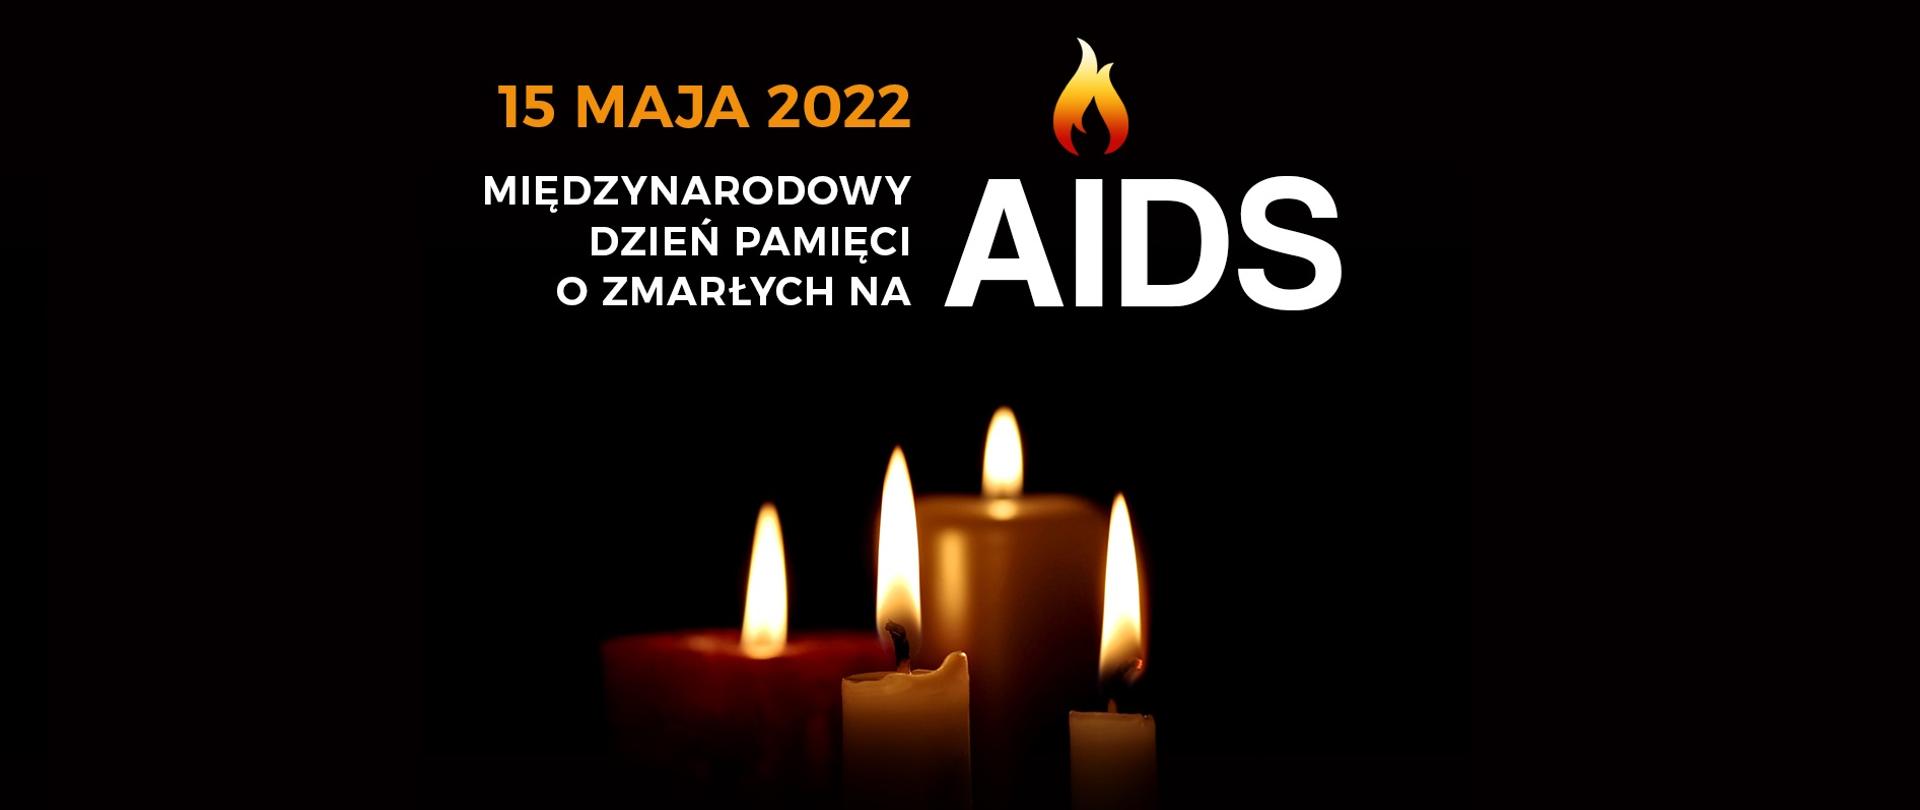 Dzień pamięci AIDS